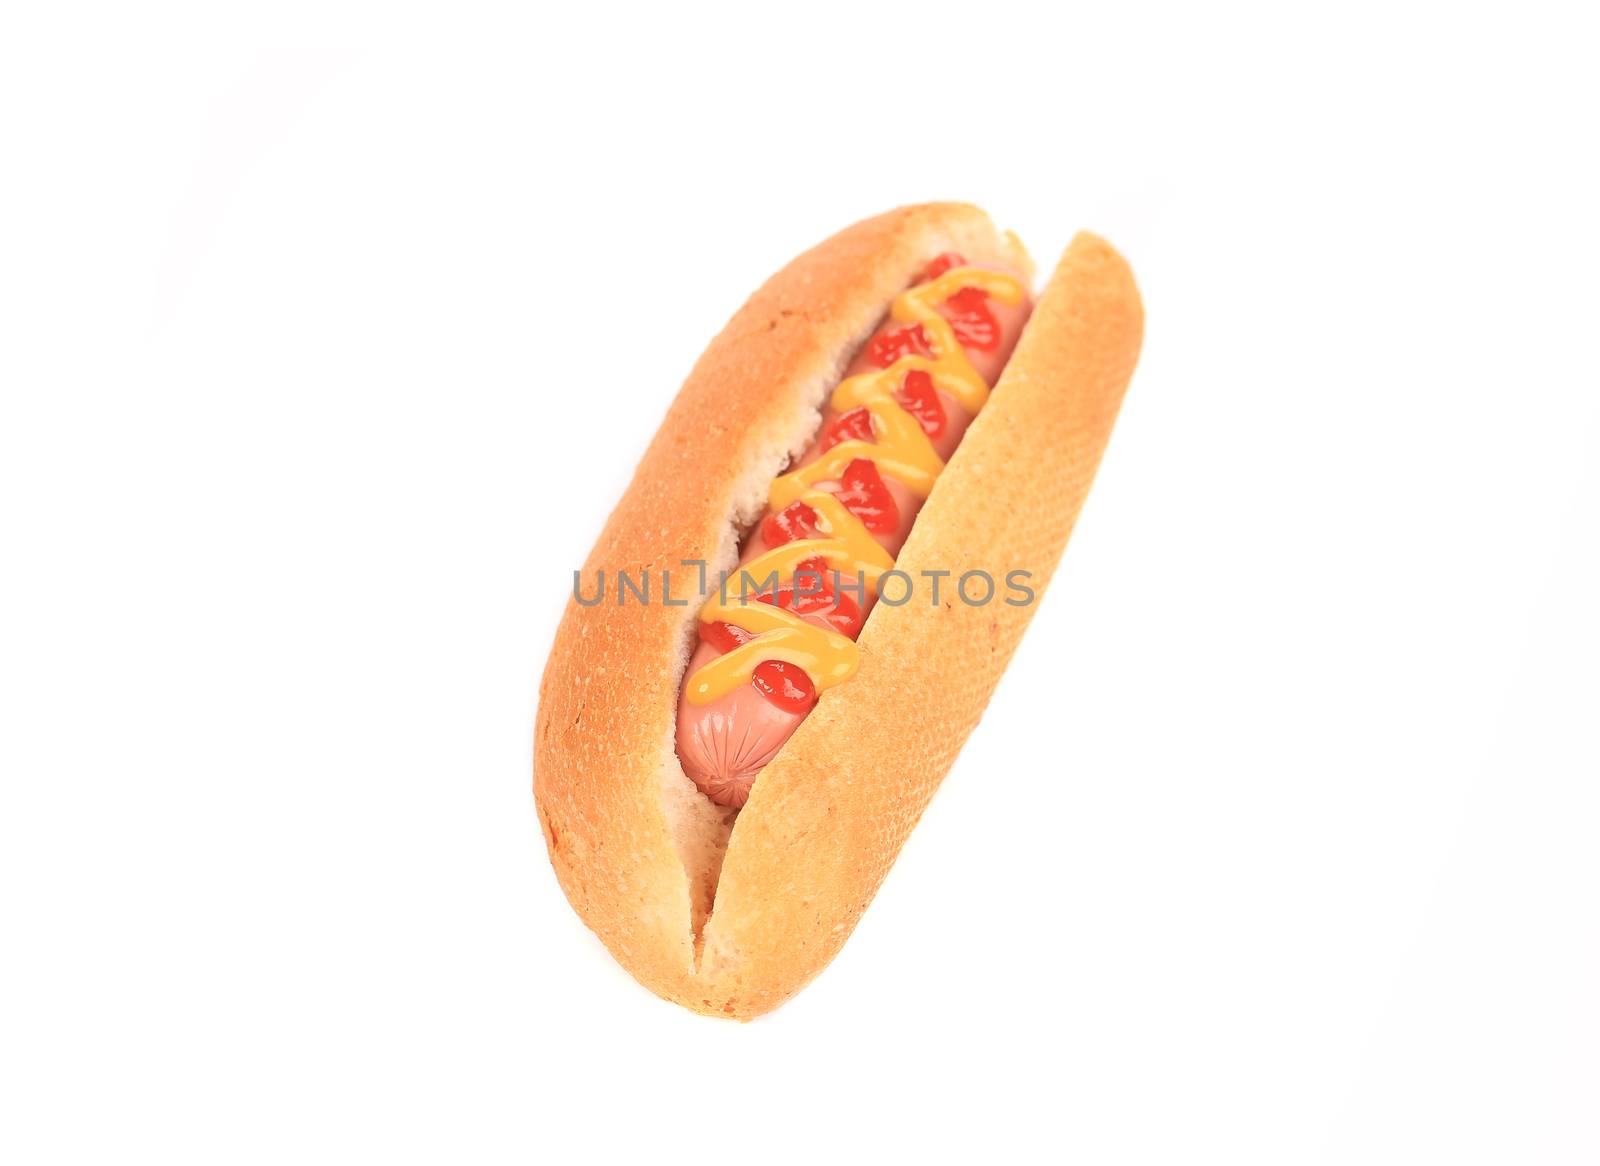 Delicious hot dog with mustard and ketchup. by indigolotos